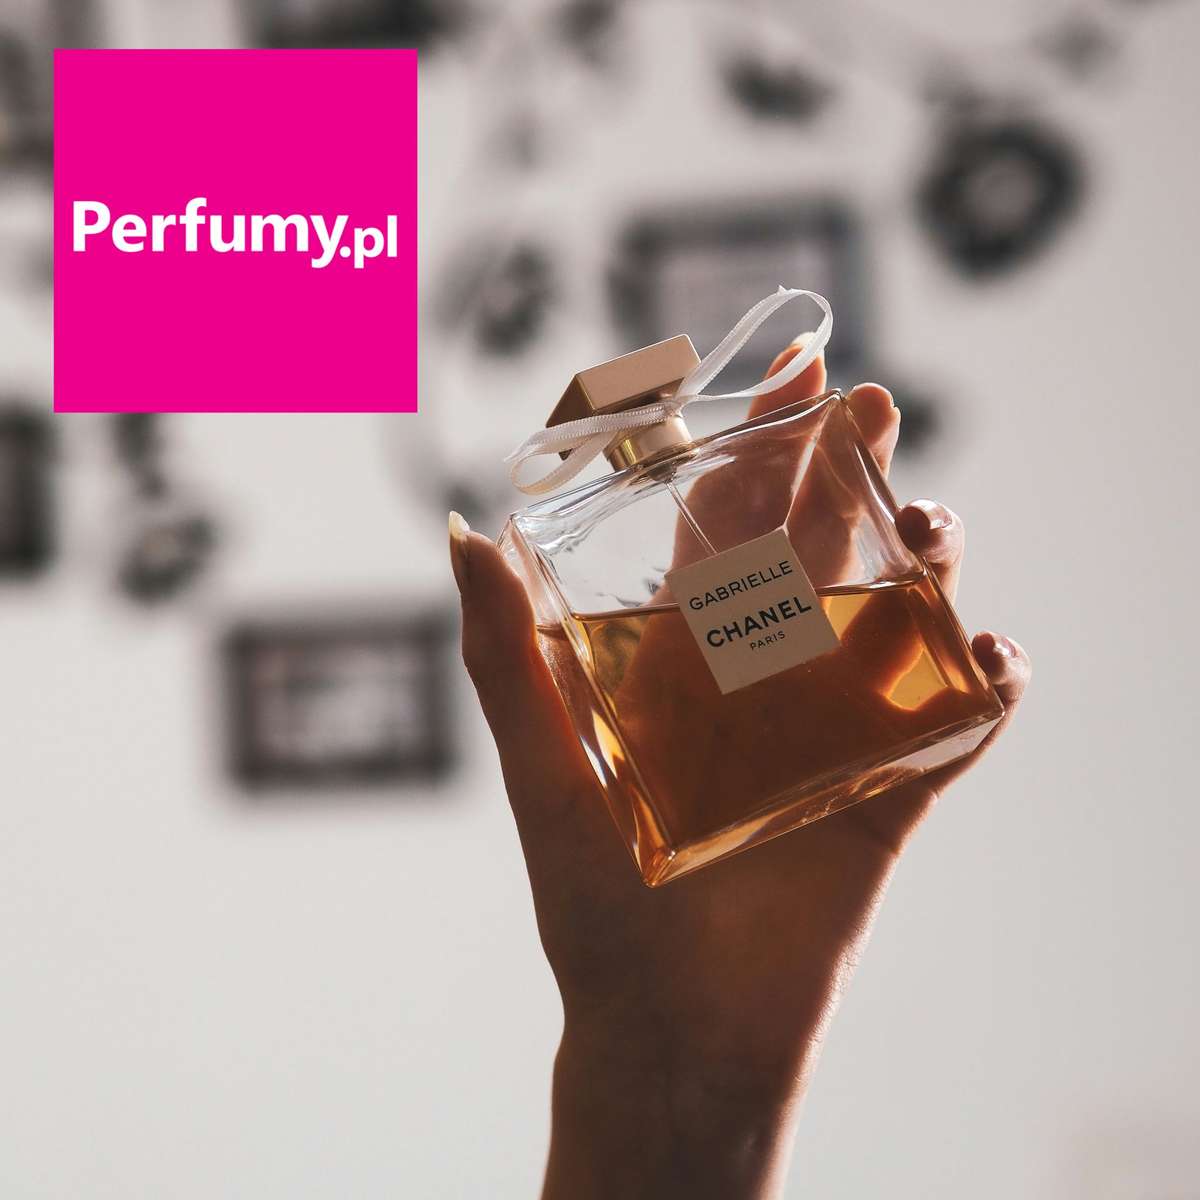 таинственный парфюм пазл онлайн